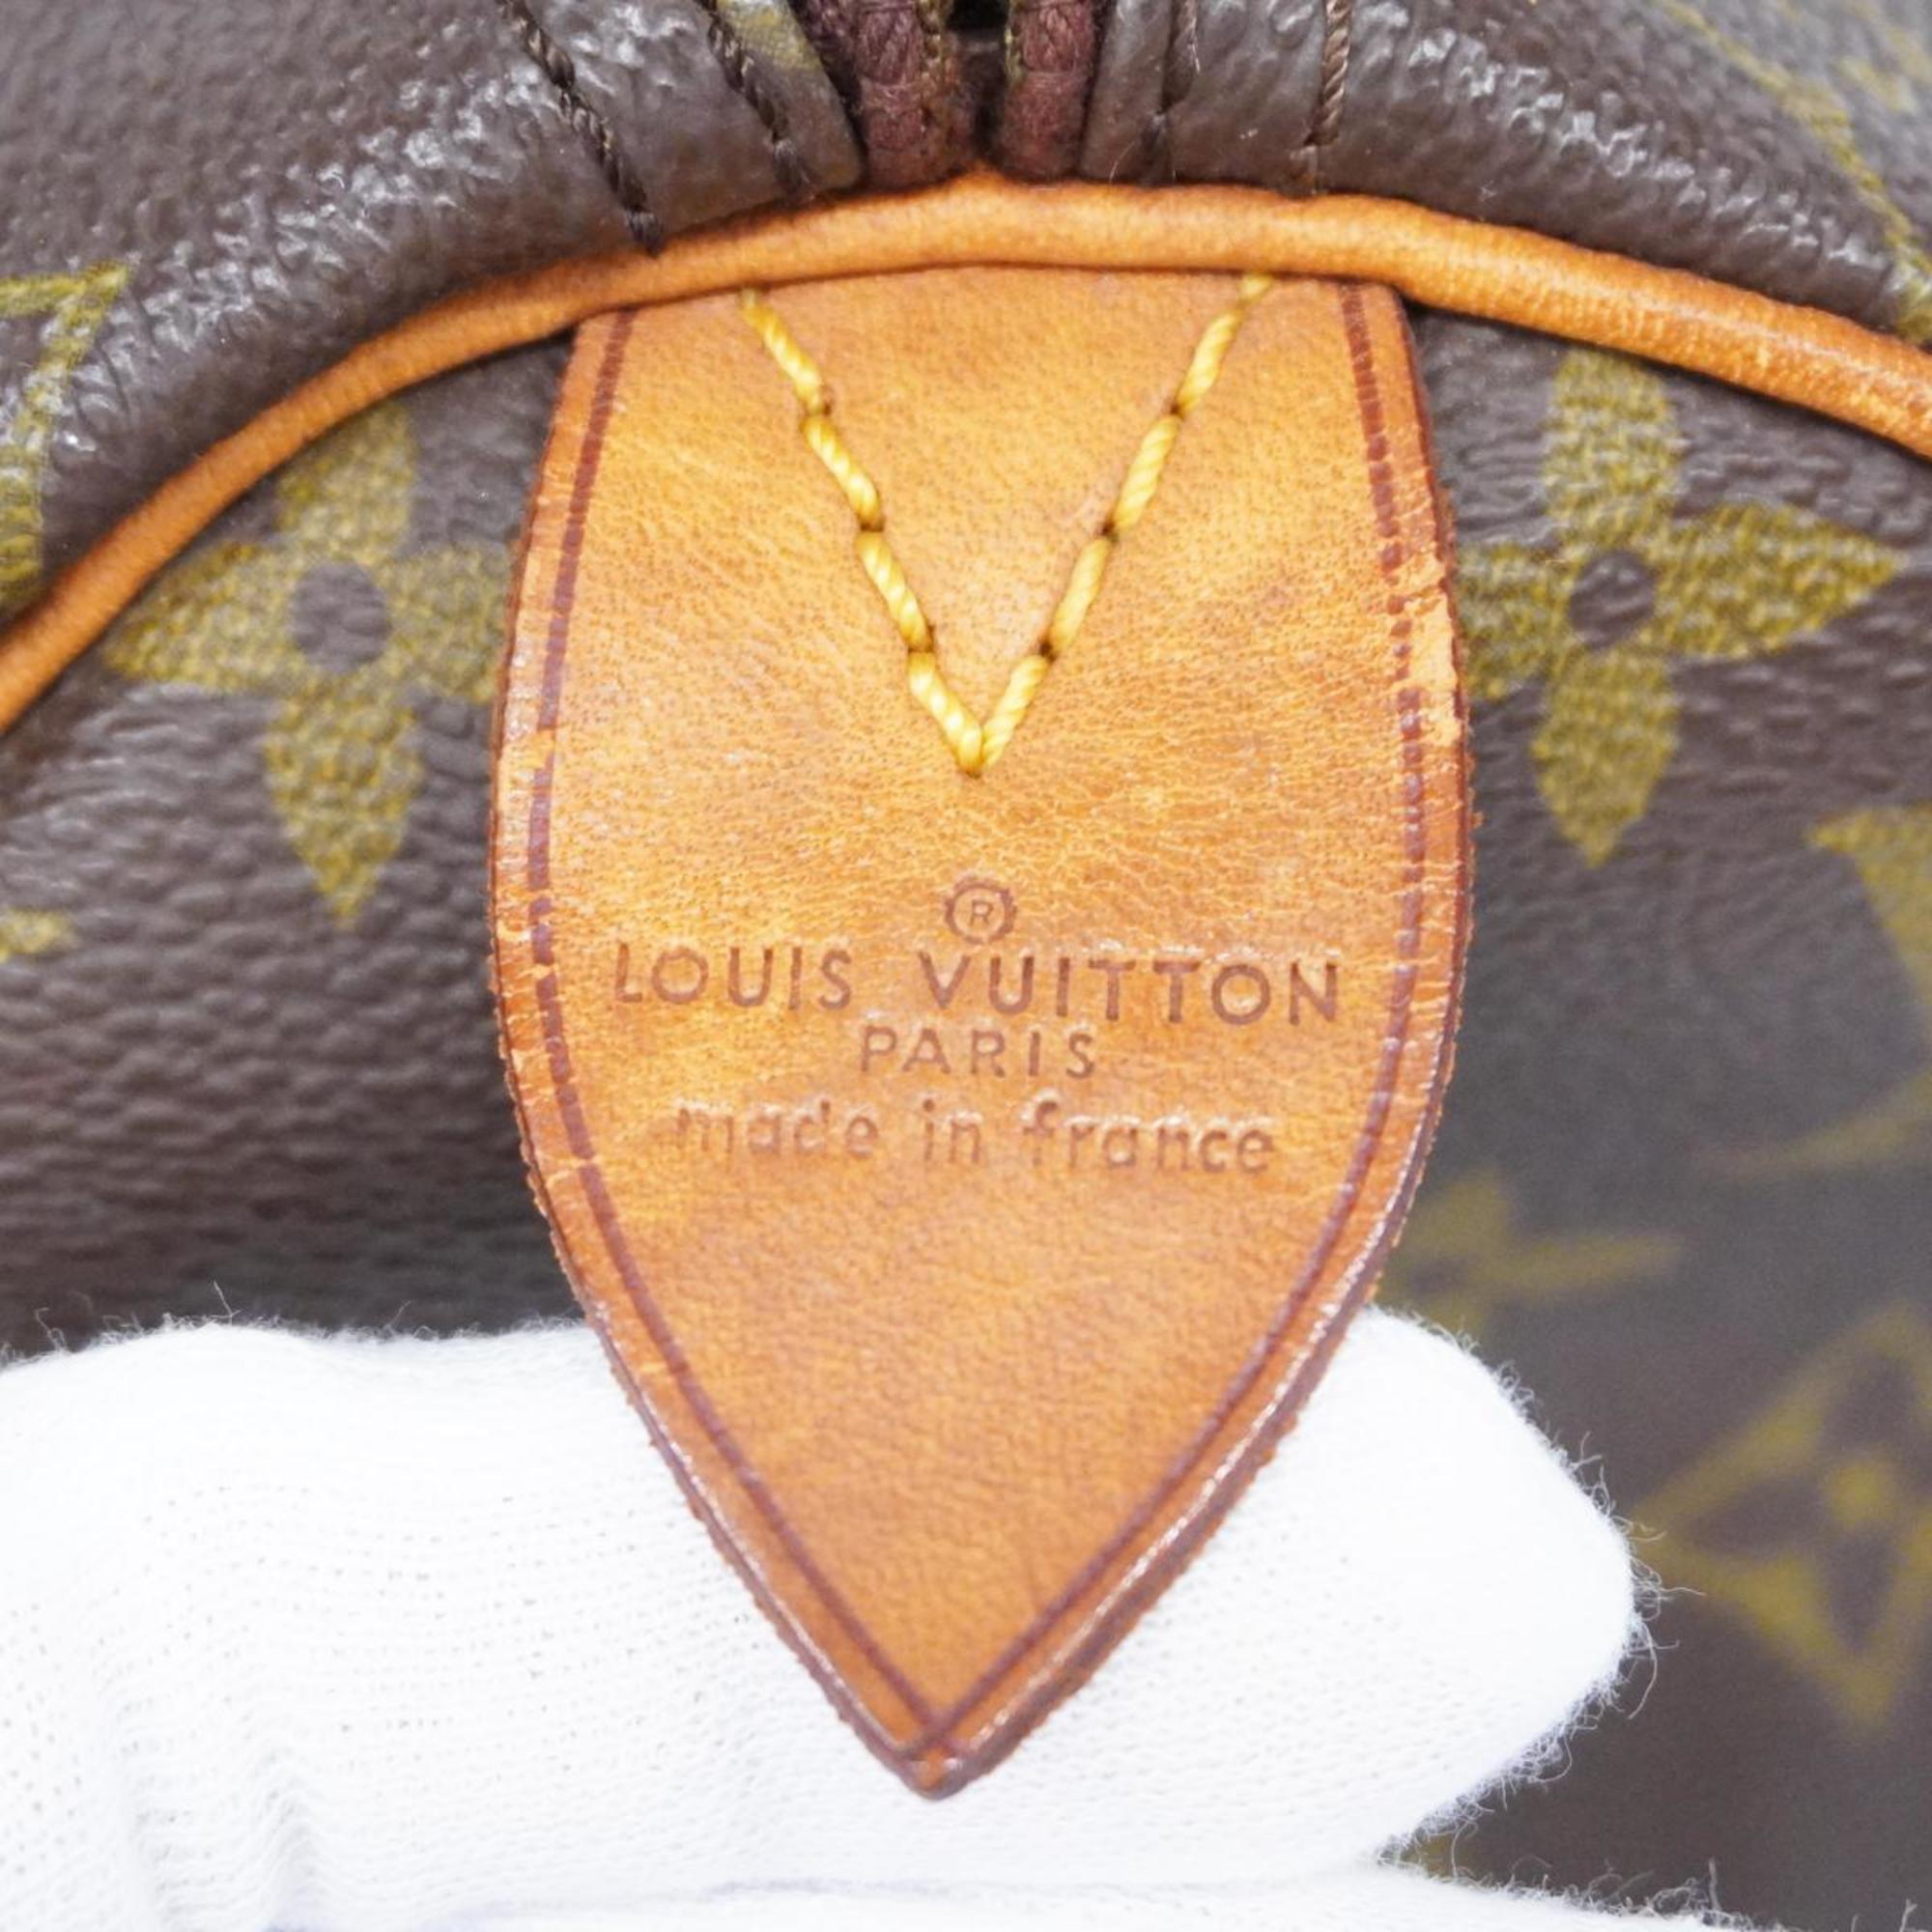 Louis Vuitton Handbag Monogram Speedy 40 M41106 Brown Ladies